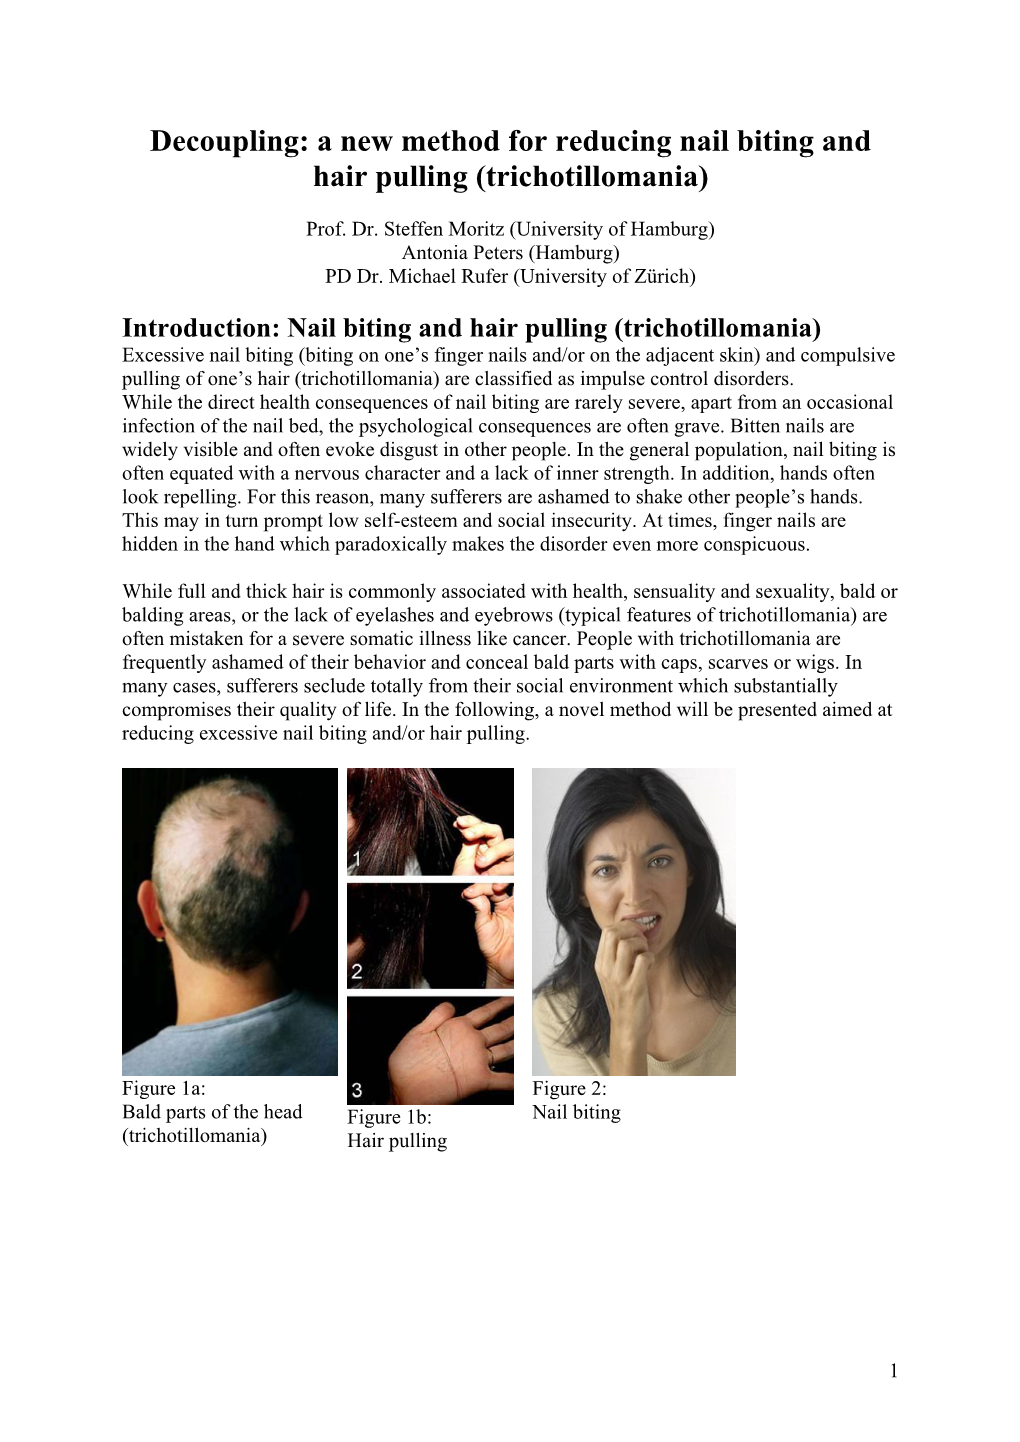 Decoupling: a New Method for Reducing Nail Biting and Hair Pulling (Trichotillomania)